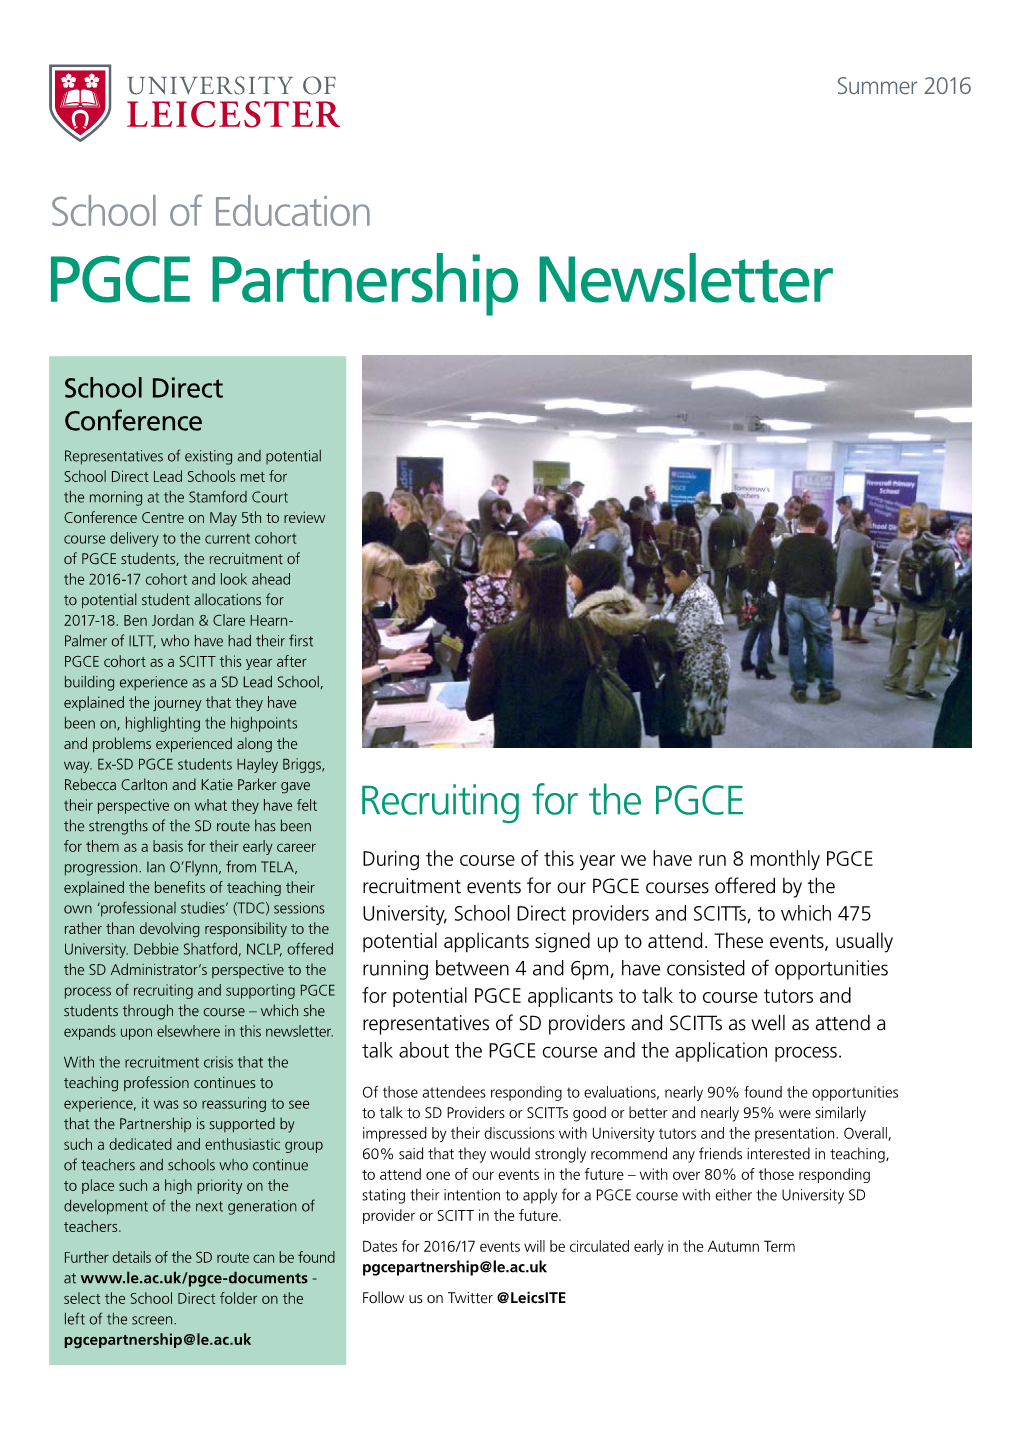 PGCE Partnership Newsletter